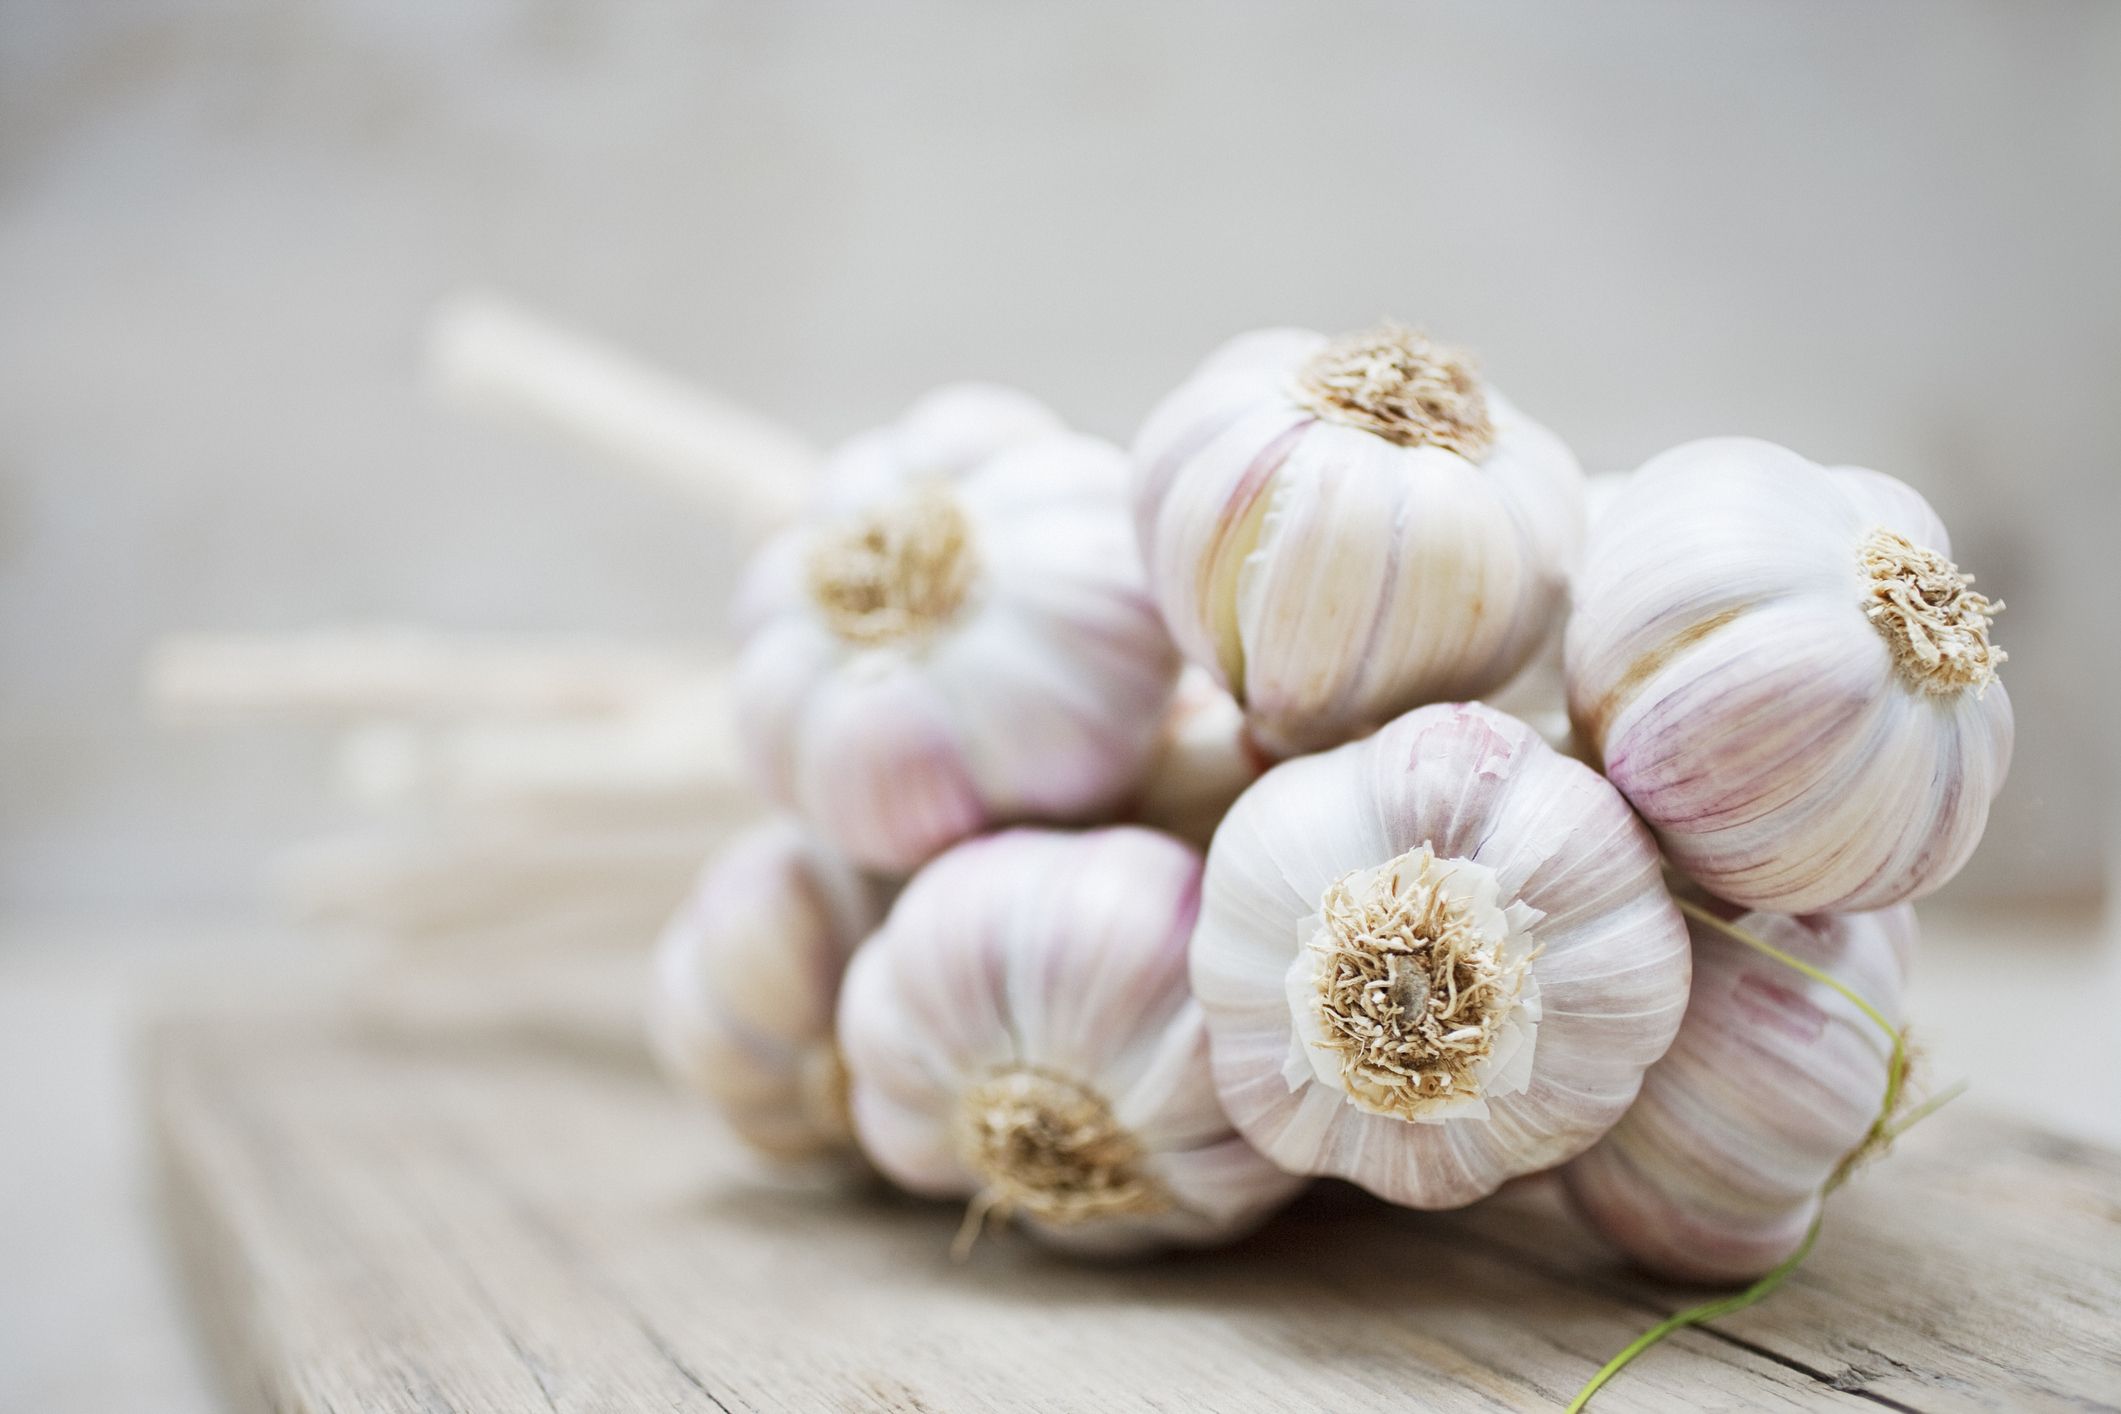 Benefits of Garlic Powder